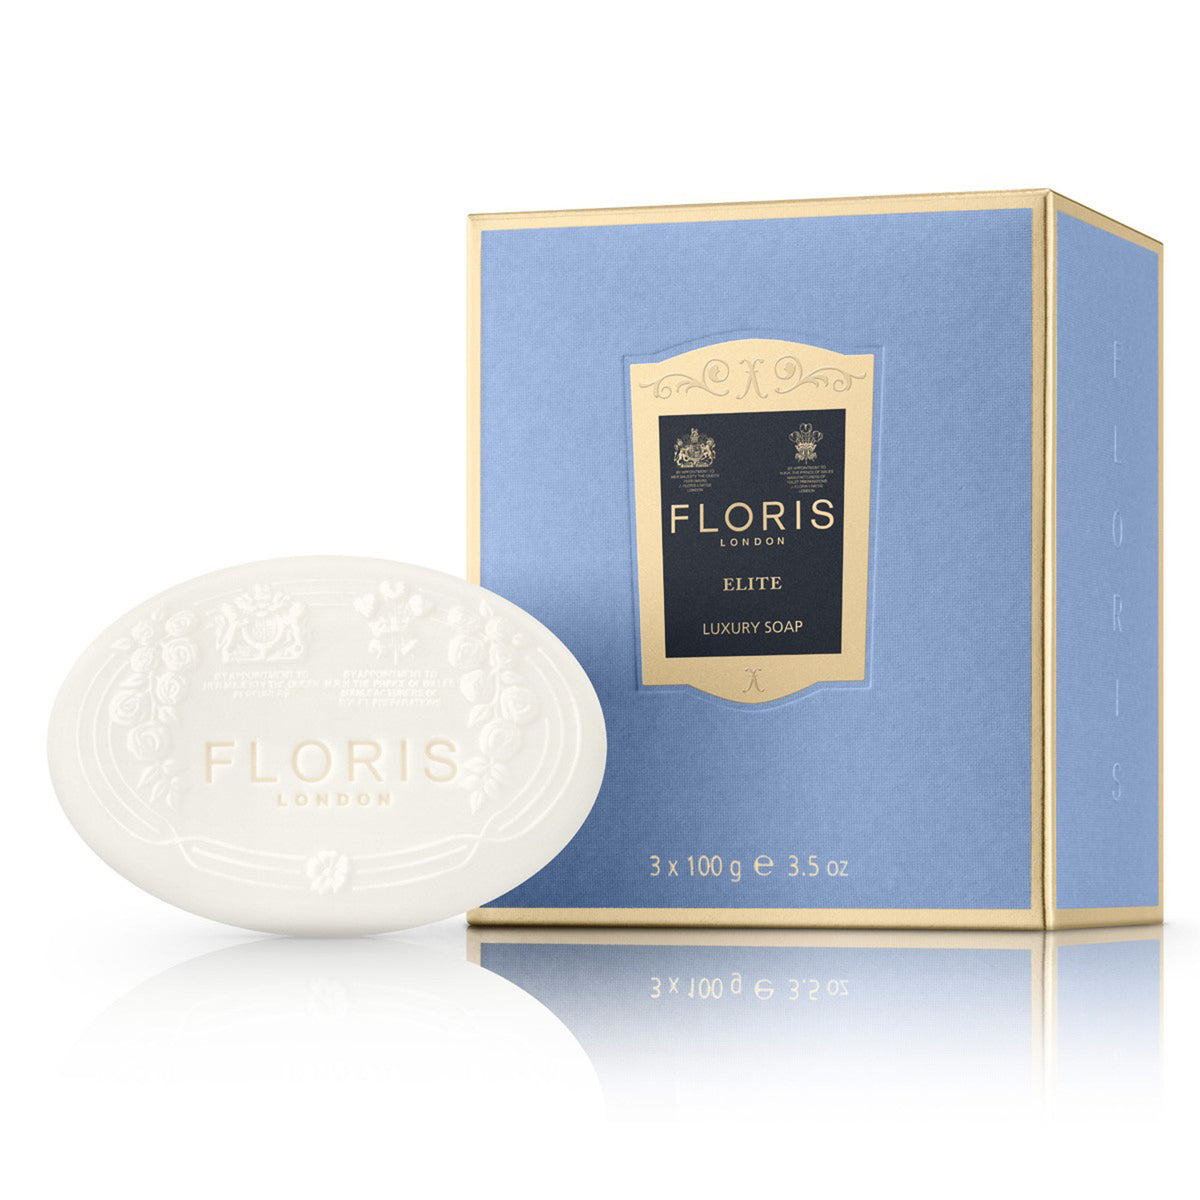 FLORIS Elite Luxury Soap